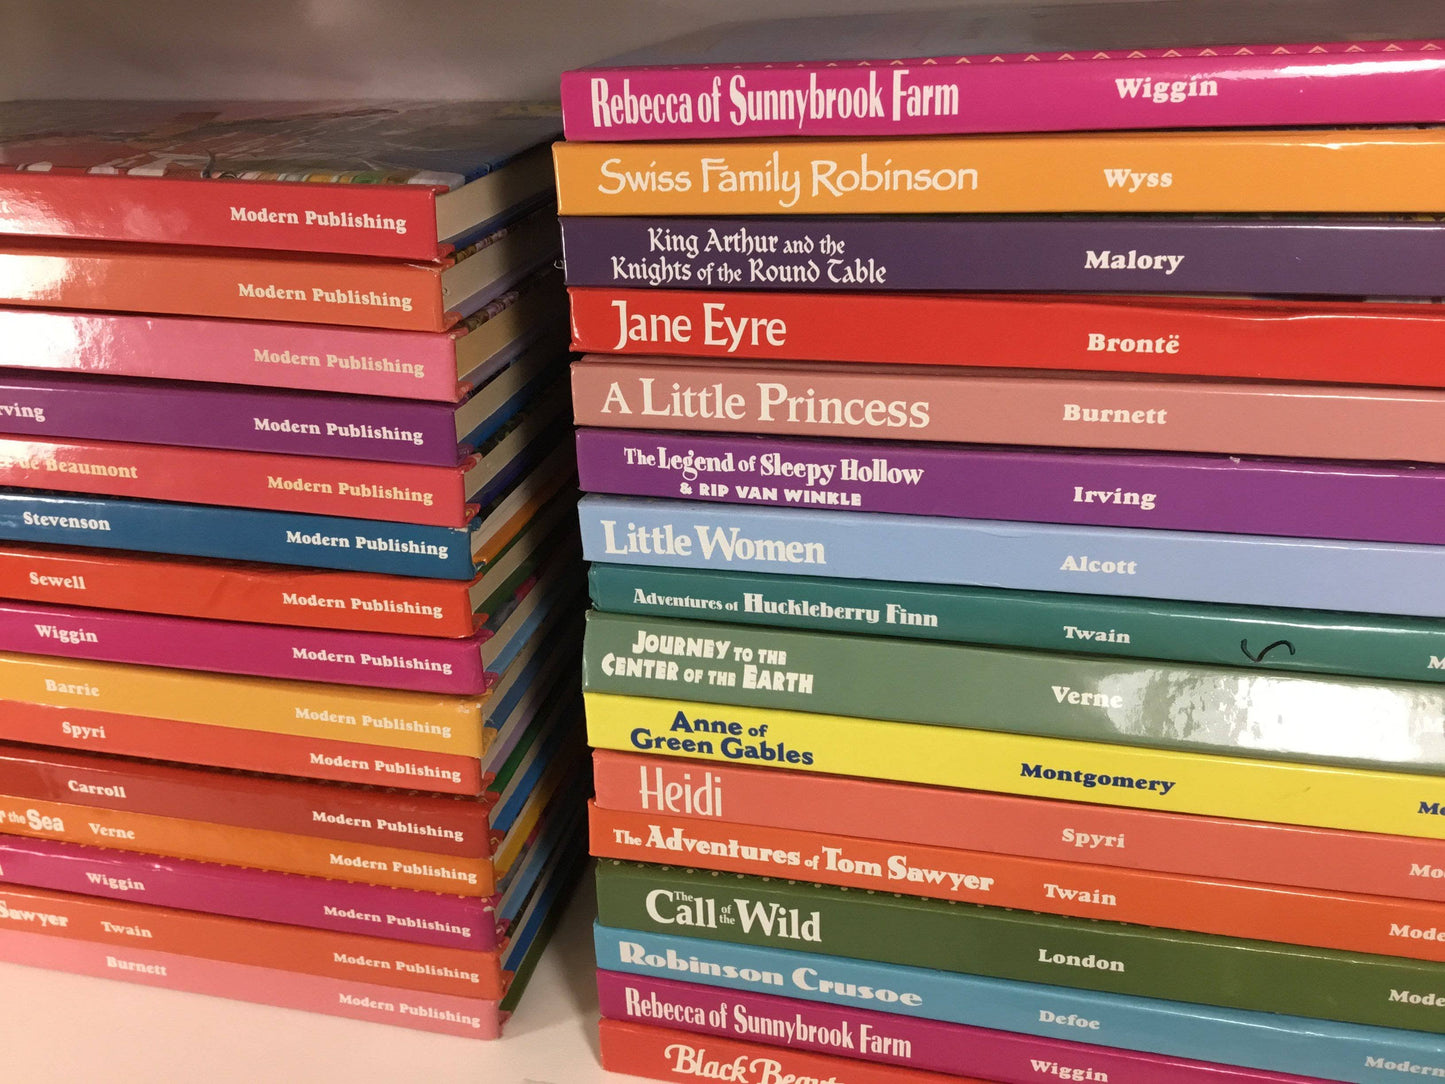 TheBookBundler Bulk Books 5 books / Premium Used Illustrated Classics Kids Books